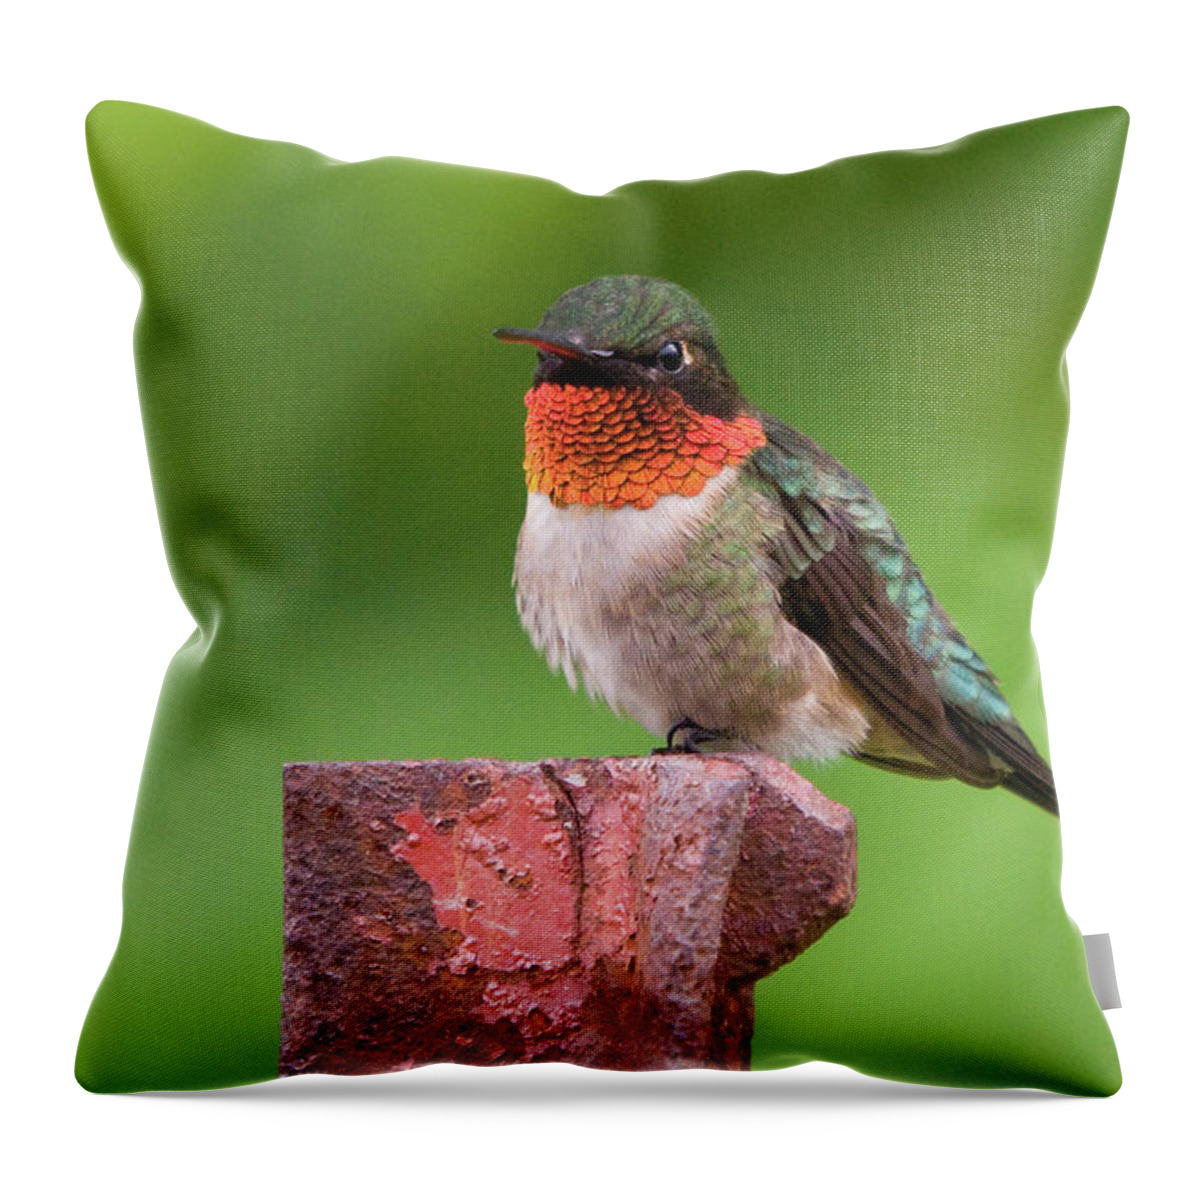 Hummingbird Throw Pillow featuring the photograph Hummy Perch by Steve Stuller